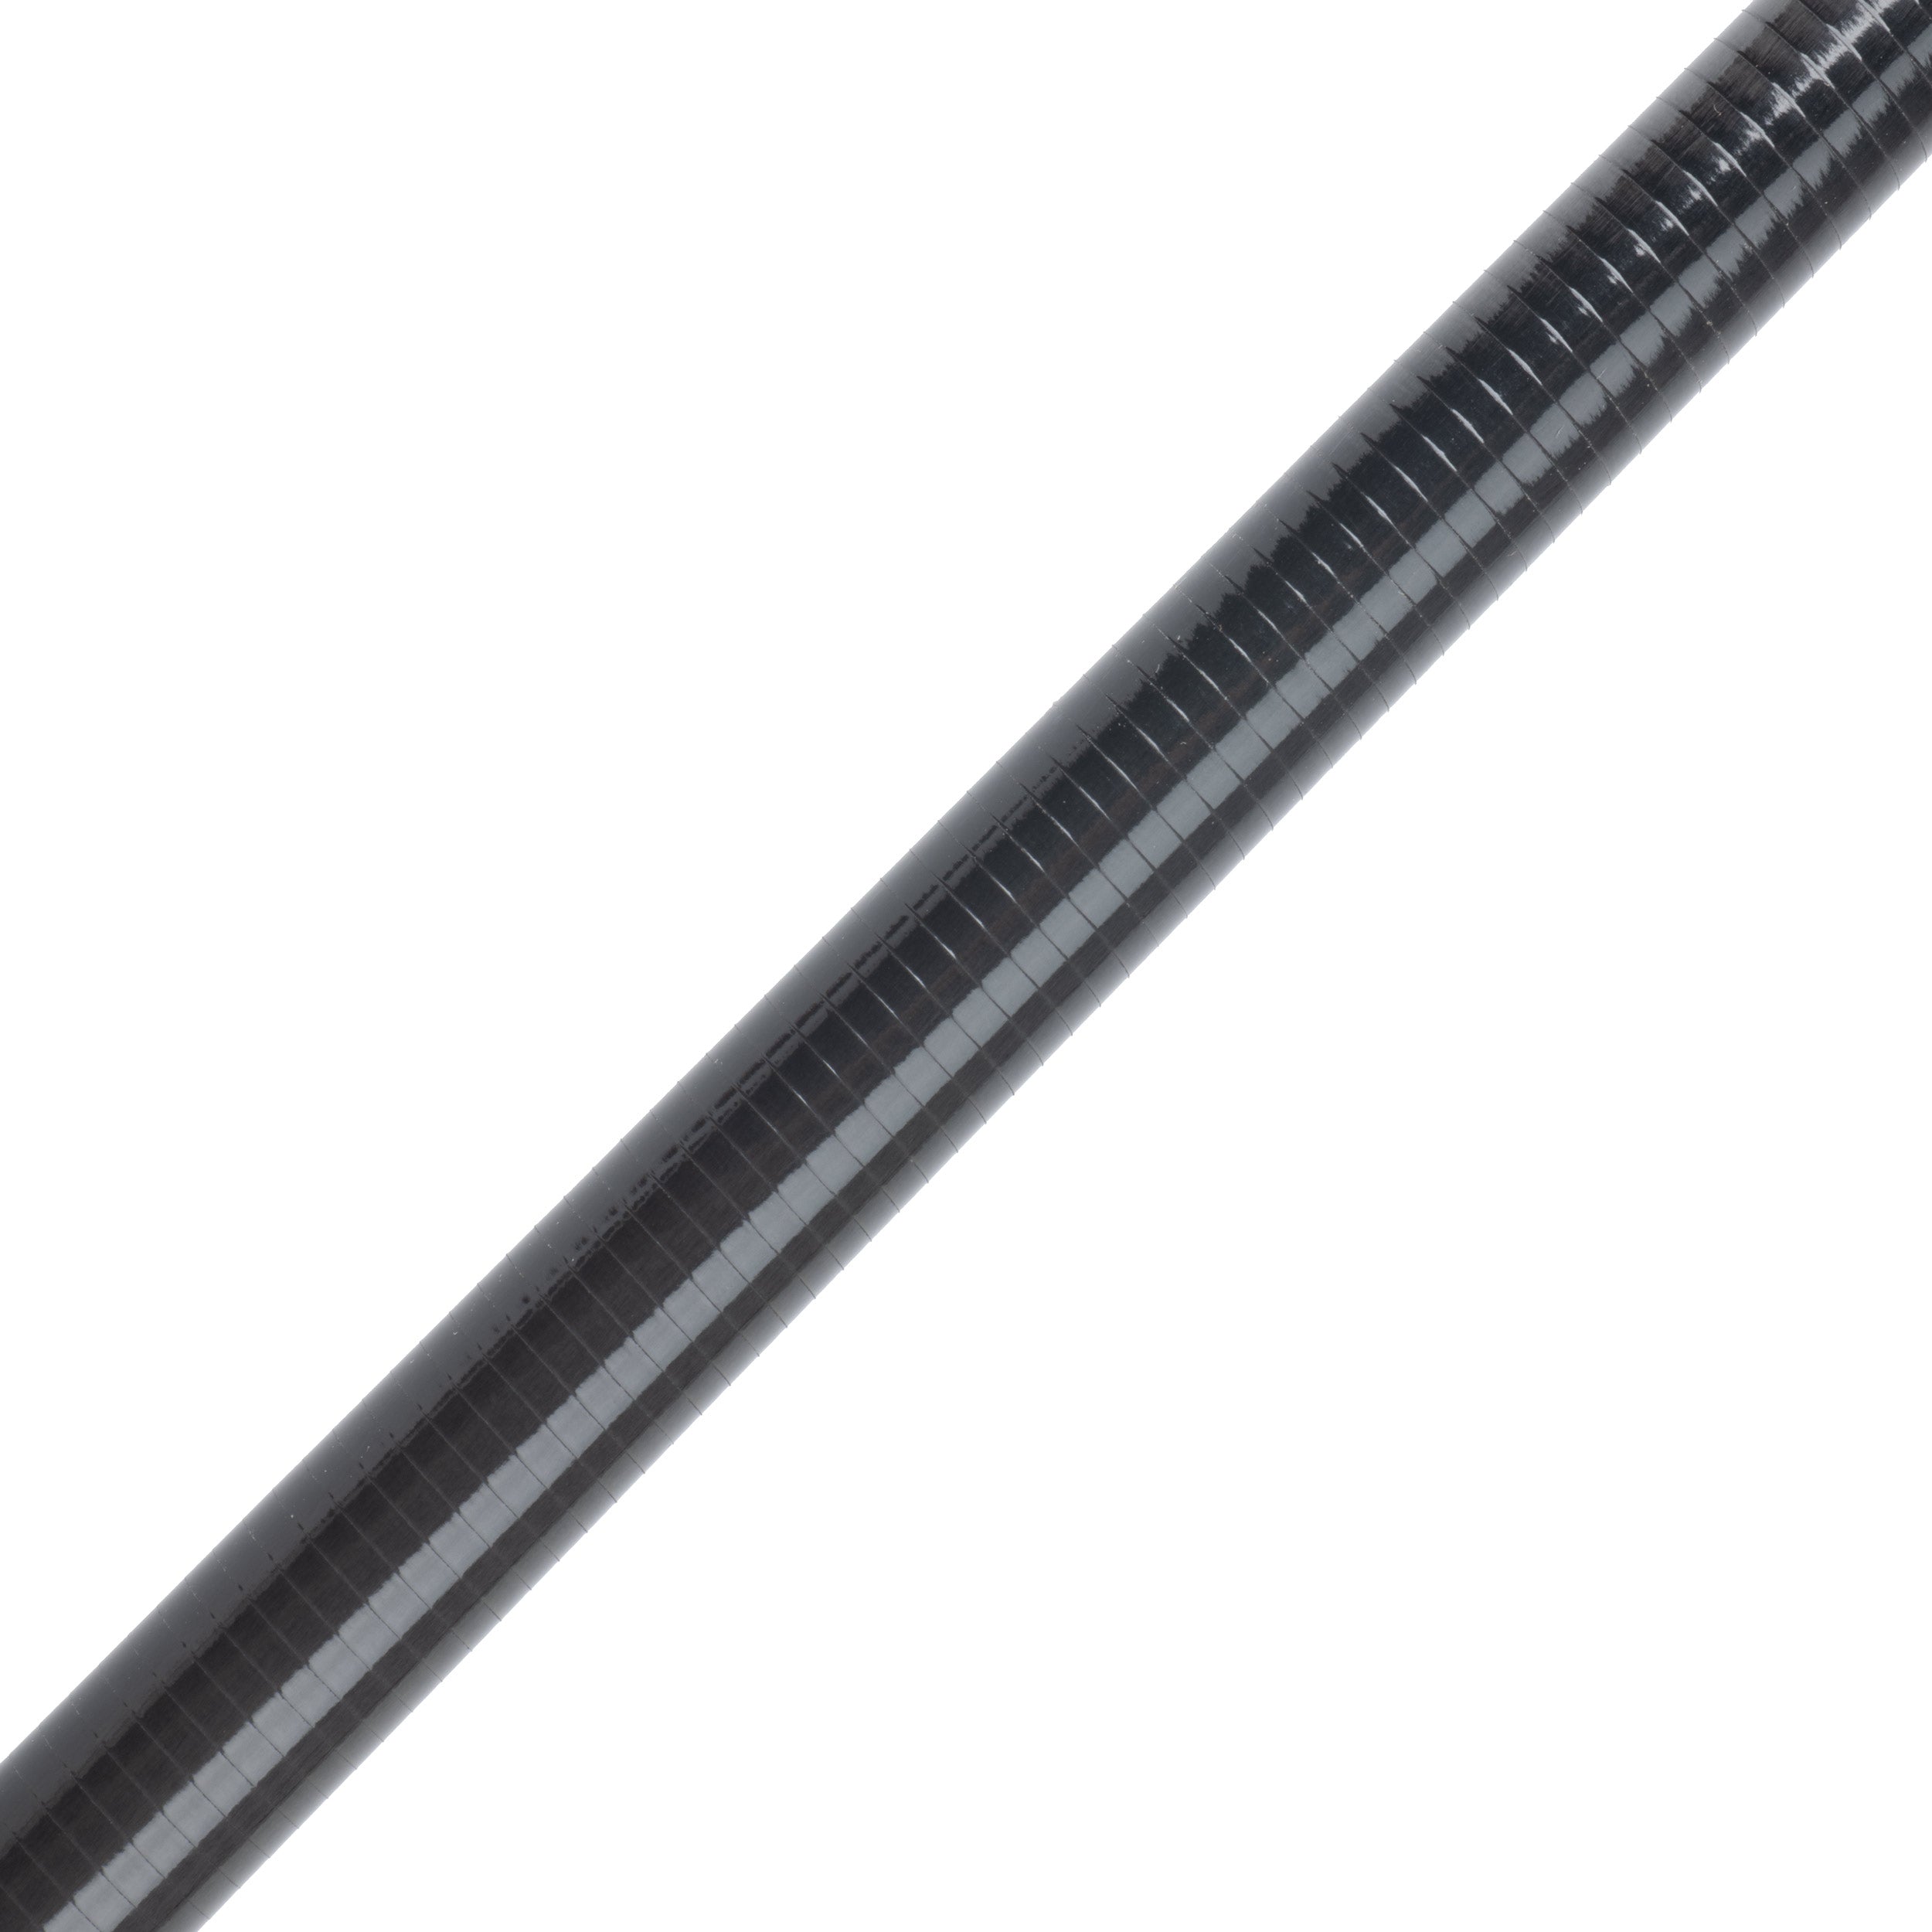 Cashion CR6r Carbon Fiber Swimbait Rod Blank - CR6r-iFS926